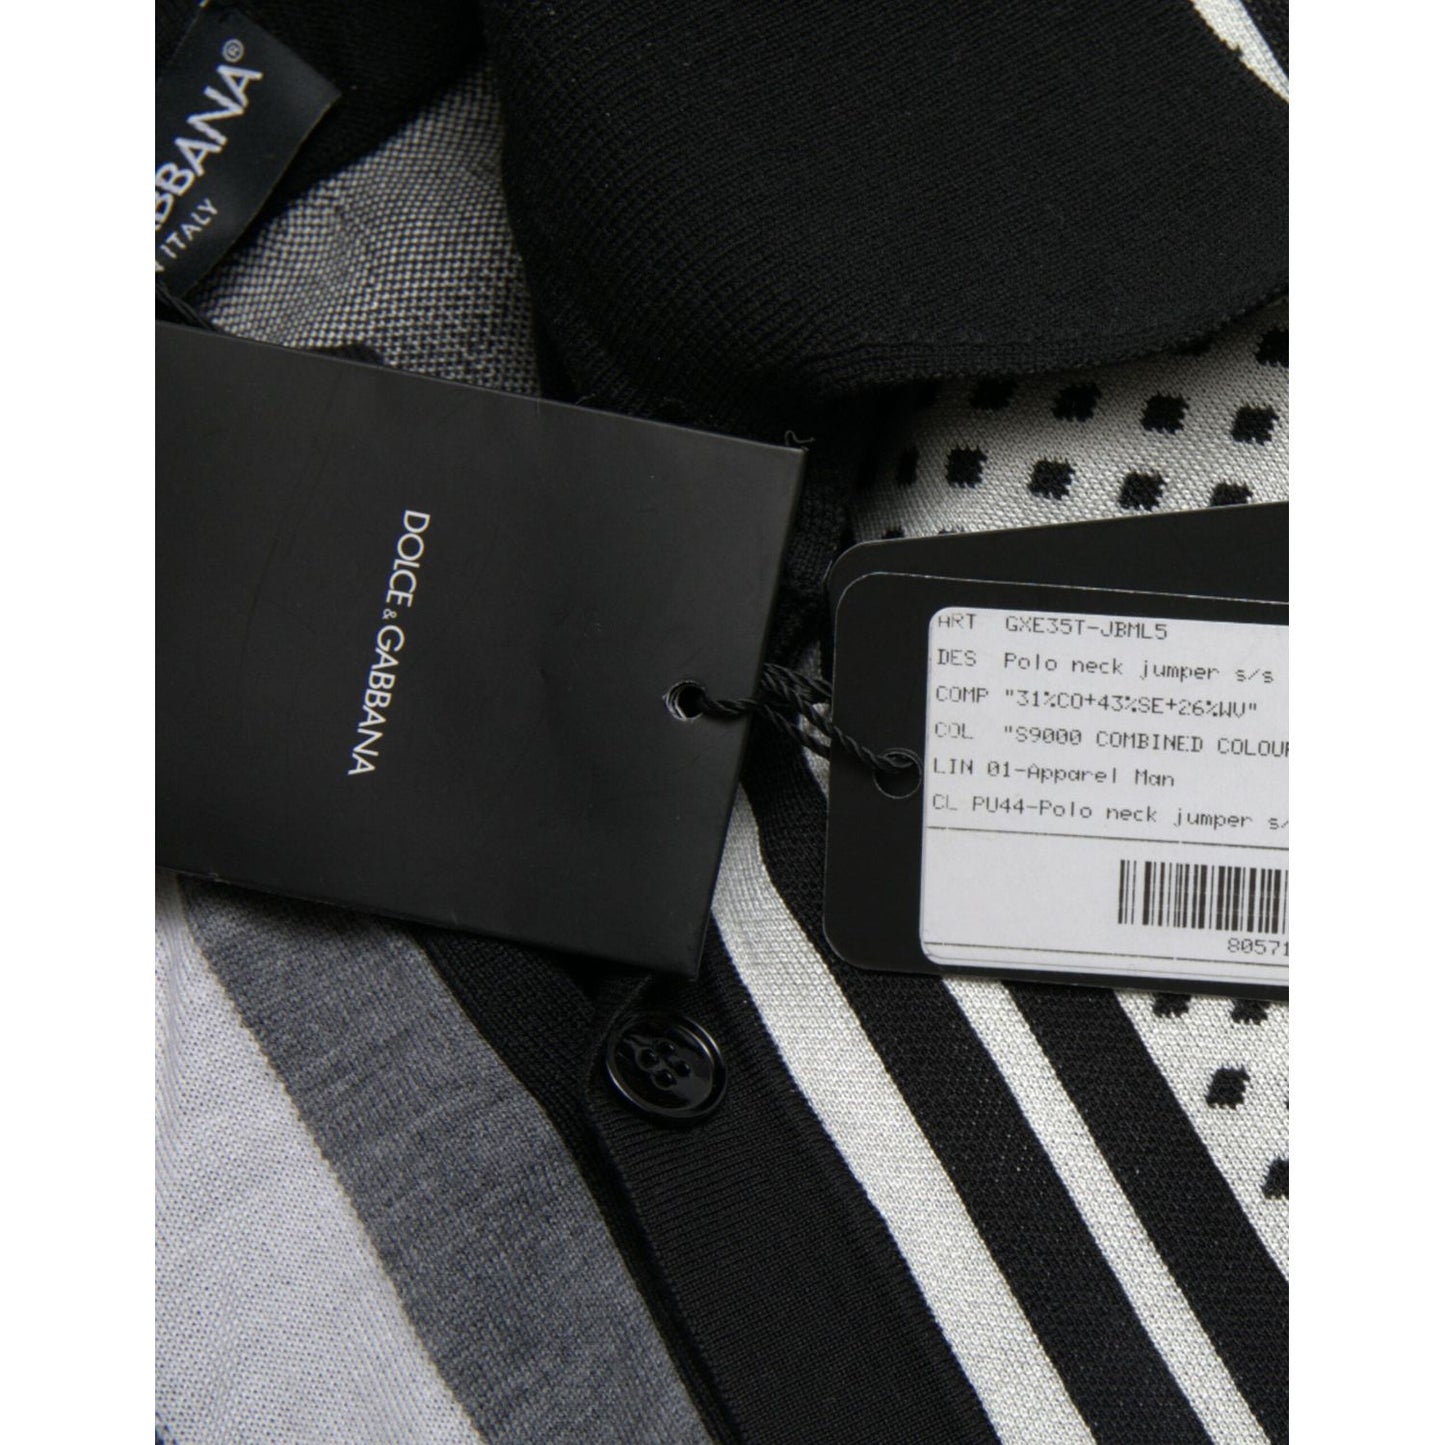 Dolce & Gabbana Elegant Striped Silk Blend Cardigan black-white-jumper-cardigan-polo-sweater